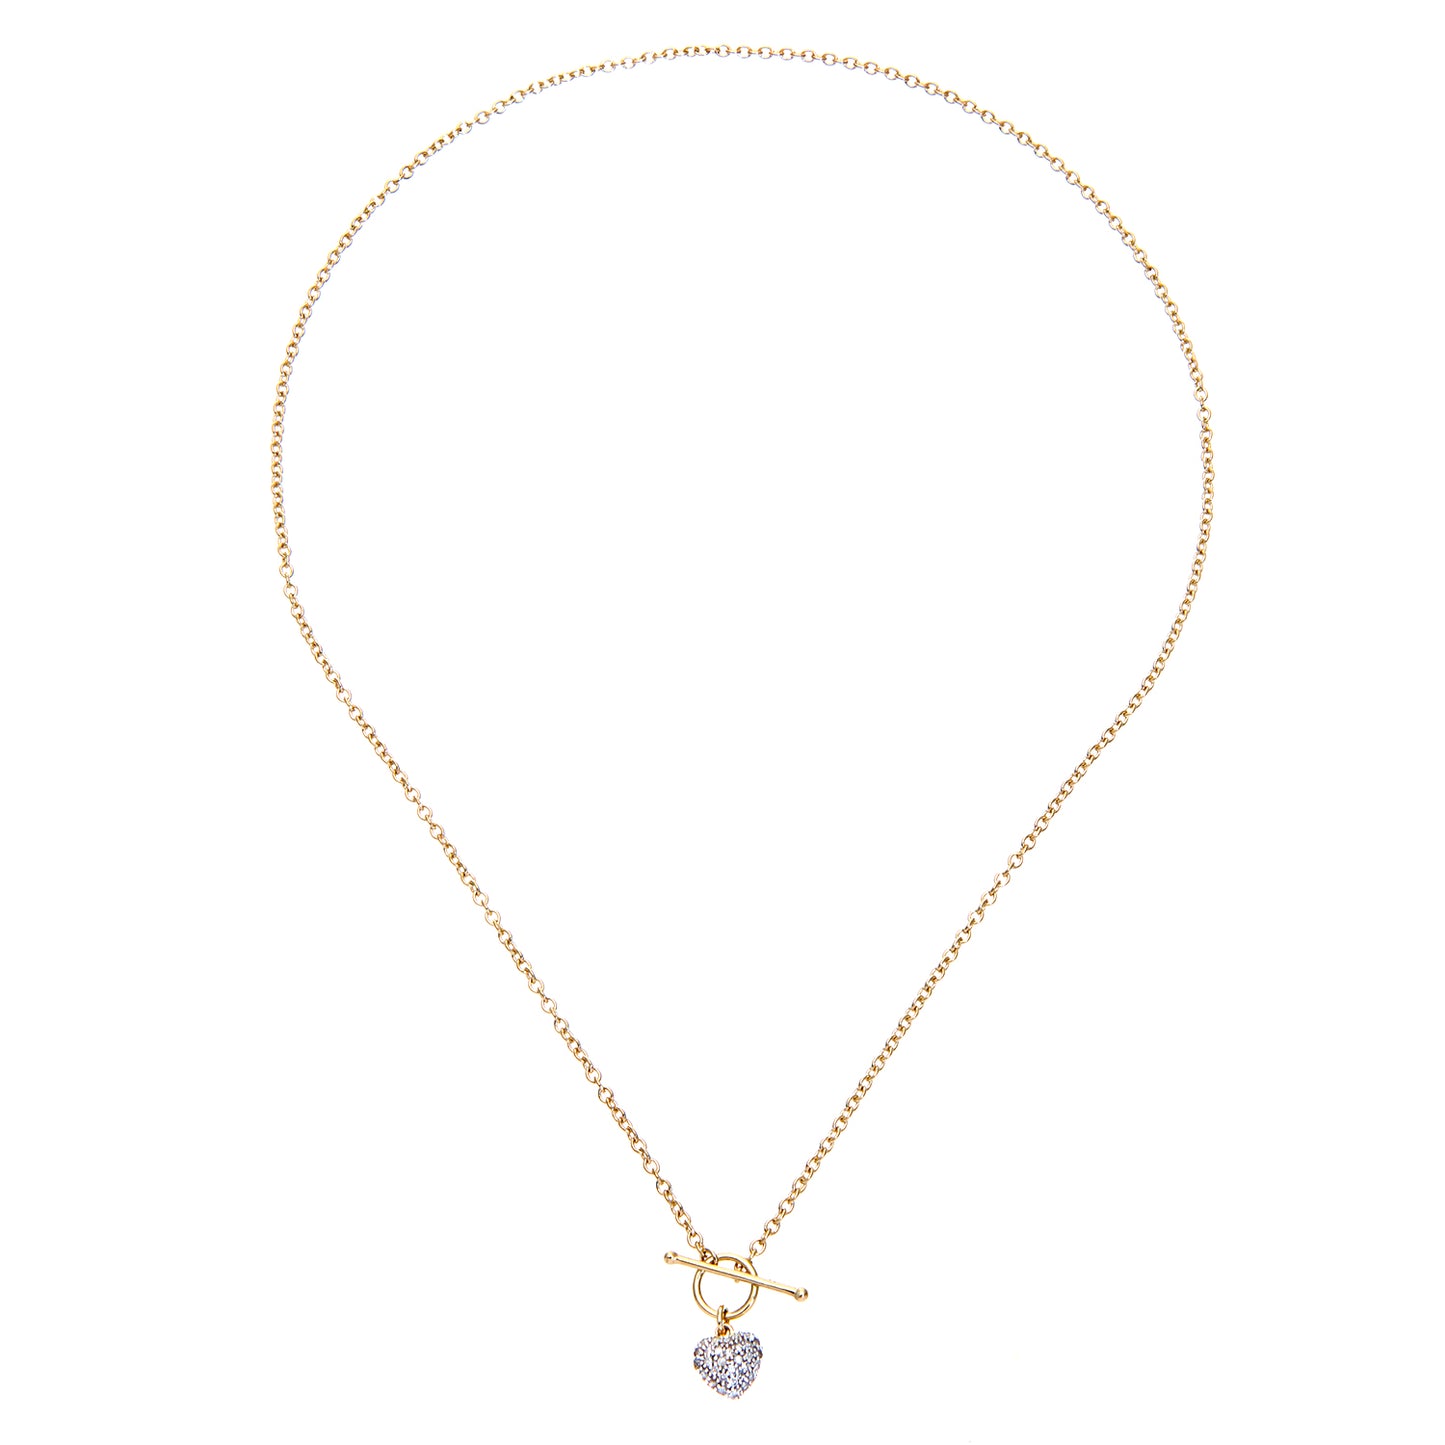 9ct Gold  Round 15pts Diamond Heart Lariat Necklace 18 inch - PNEAXL01713Y